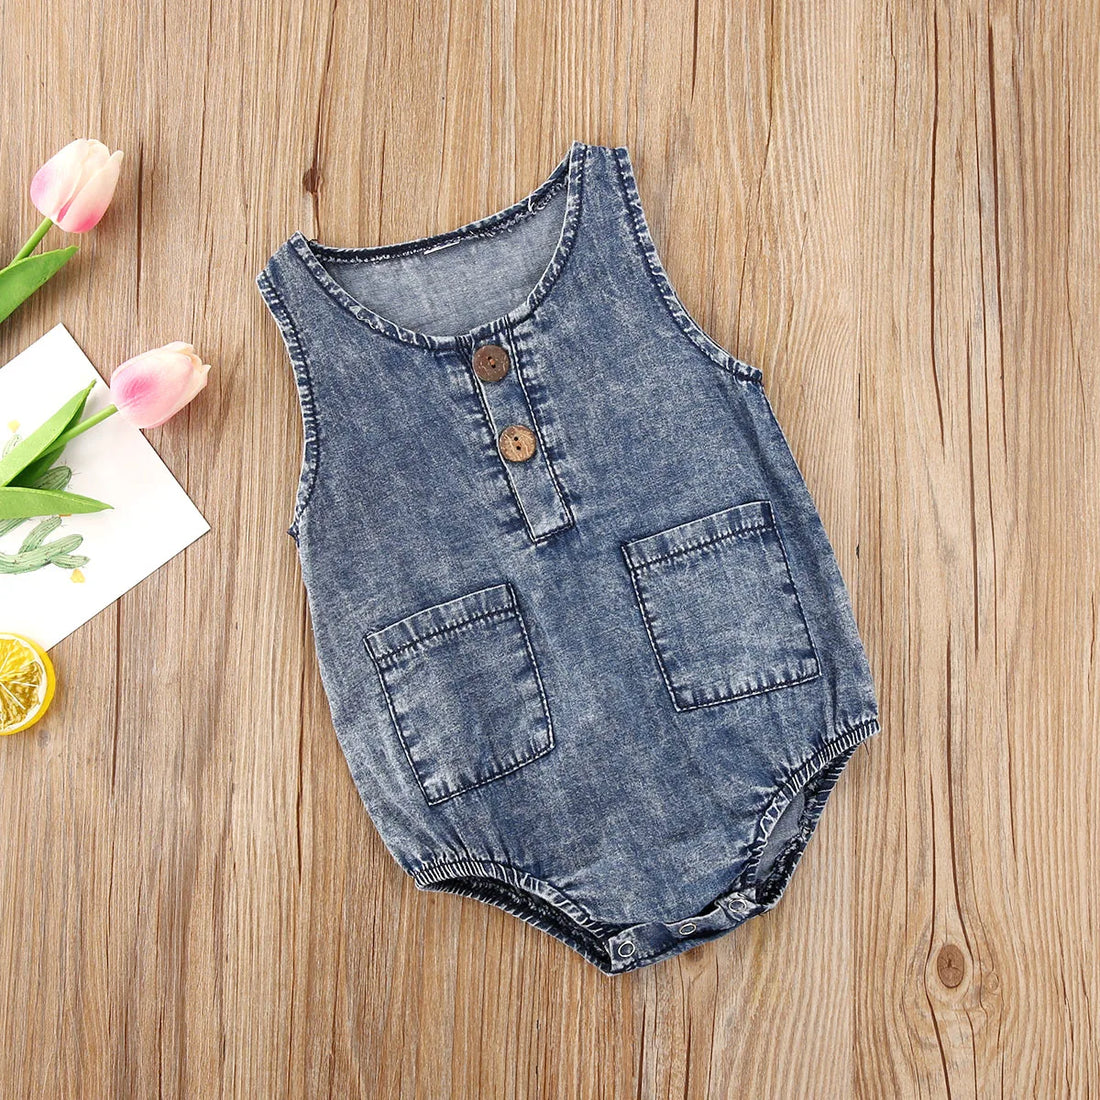 Unisex Sleeveless Button Pocket Cute Denim Rompers by Baby Minaj Cruz